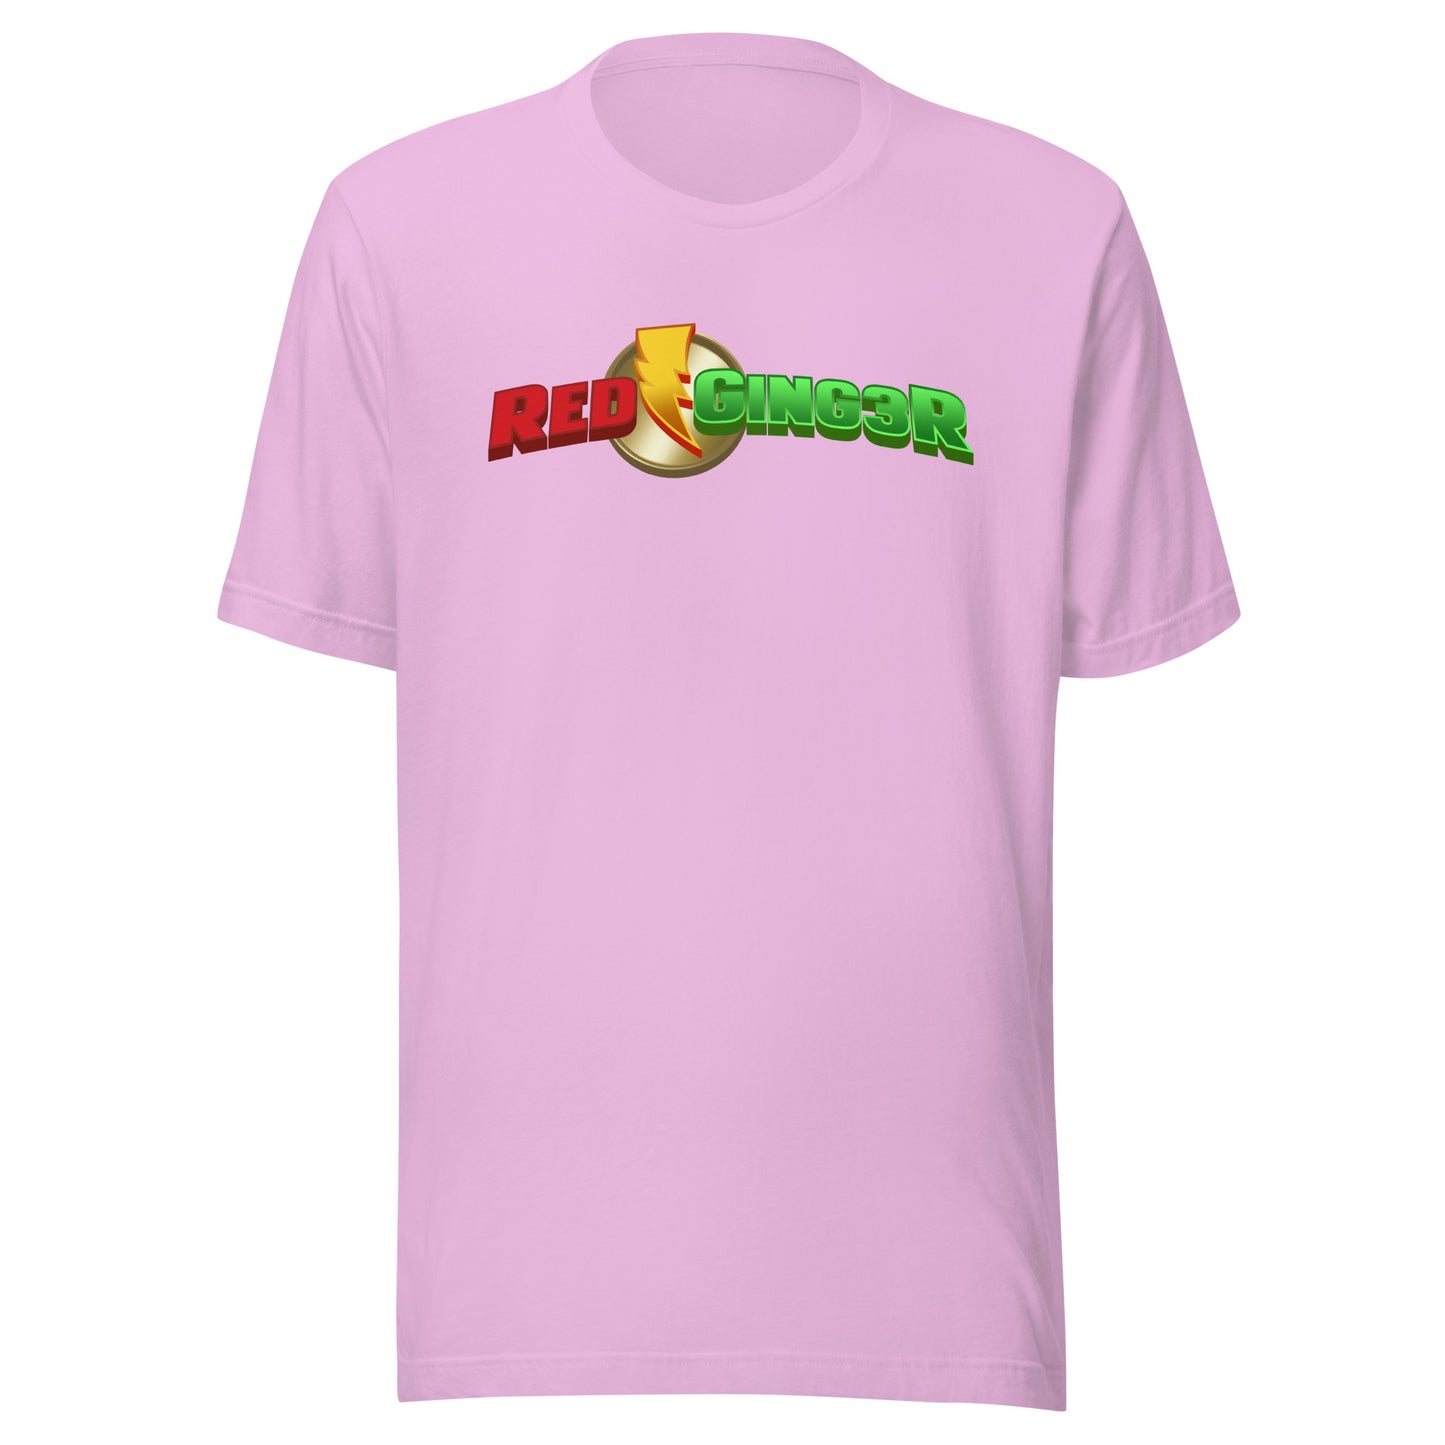 Adult REDGING3R Staple T-Shirt